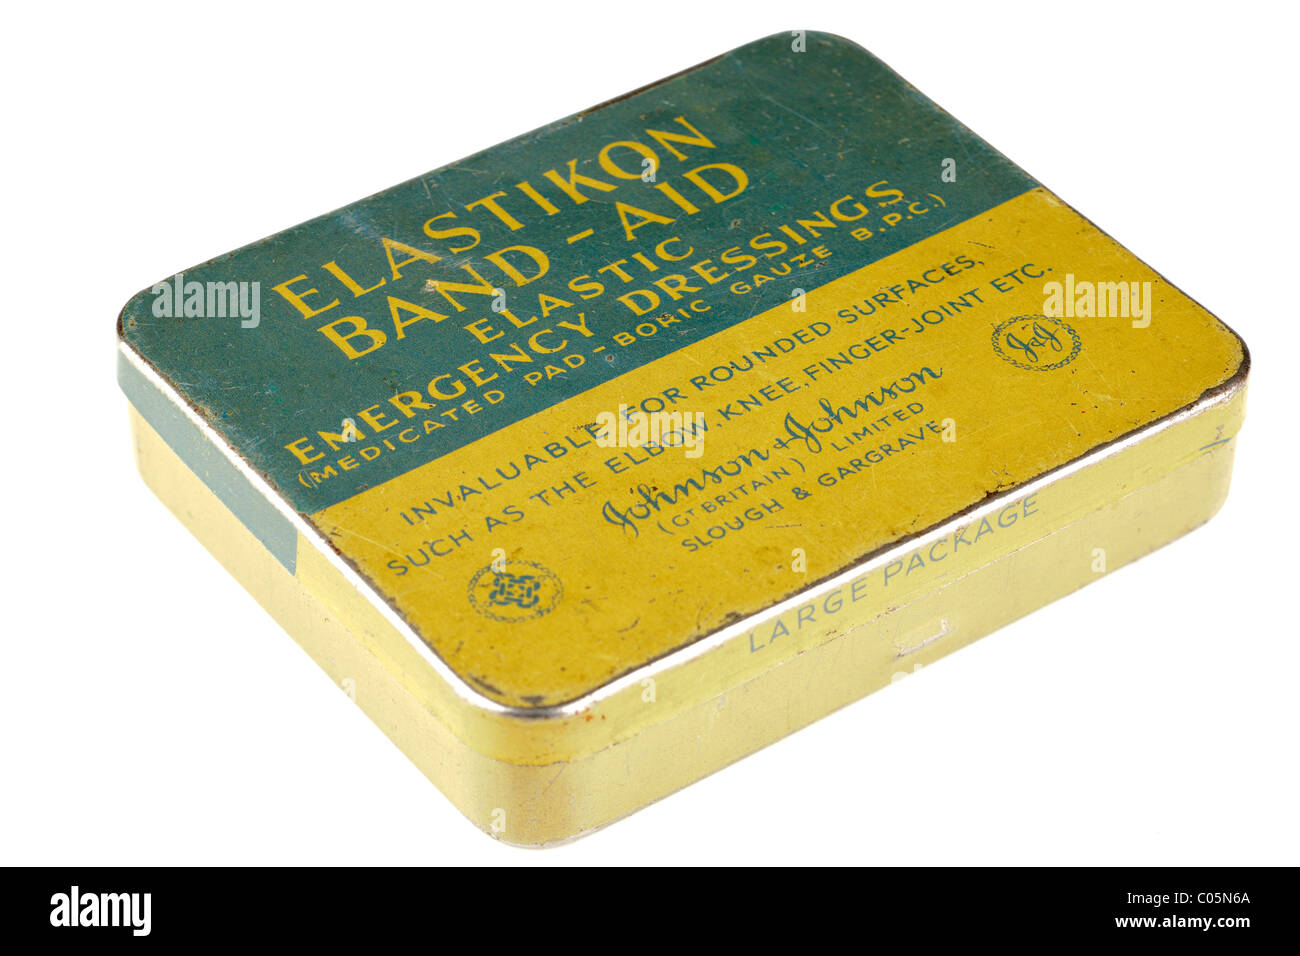 Old vintage Johnson and Johnson Elastikon Band-aid tin. EDITORIAL ONLY Stock Photo